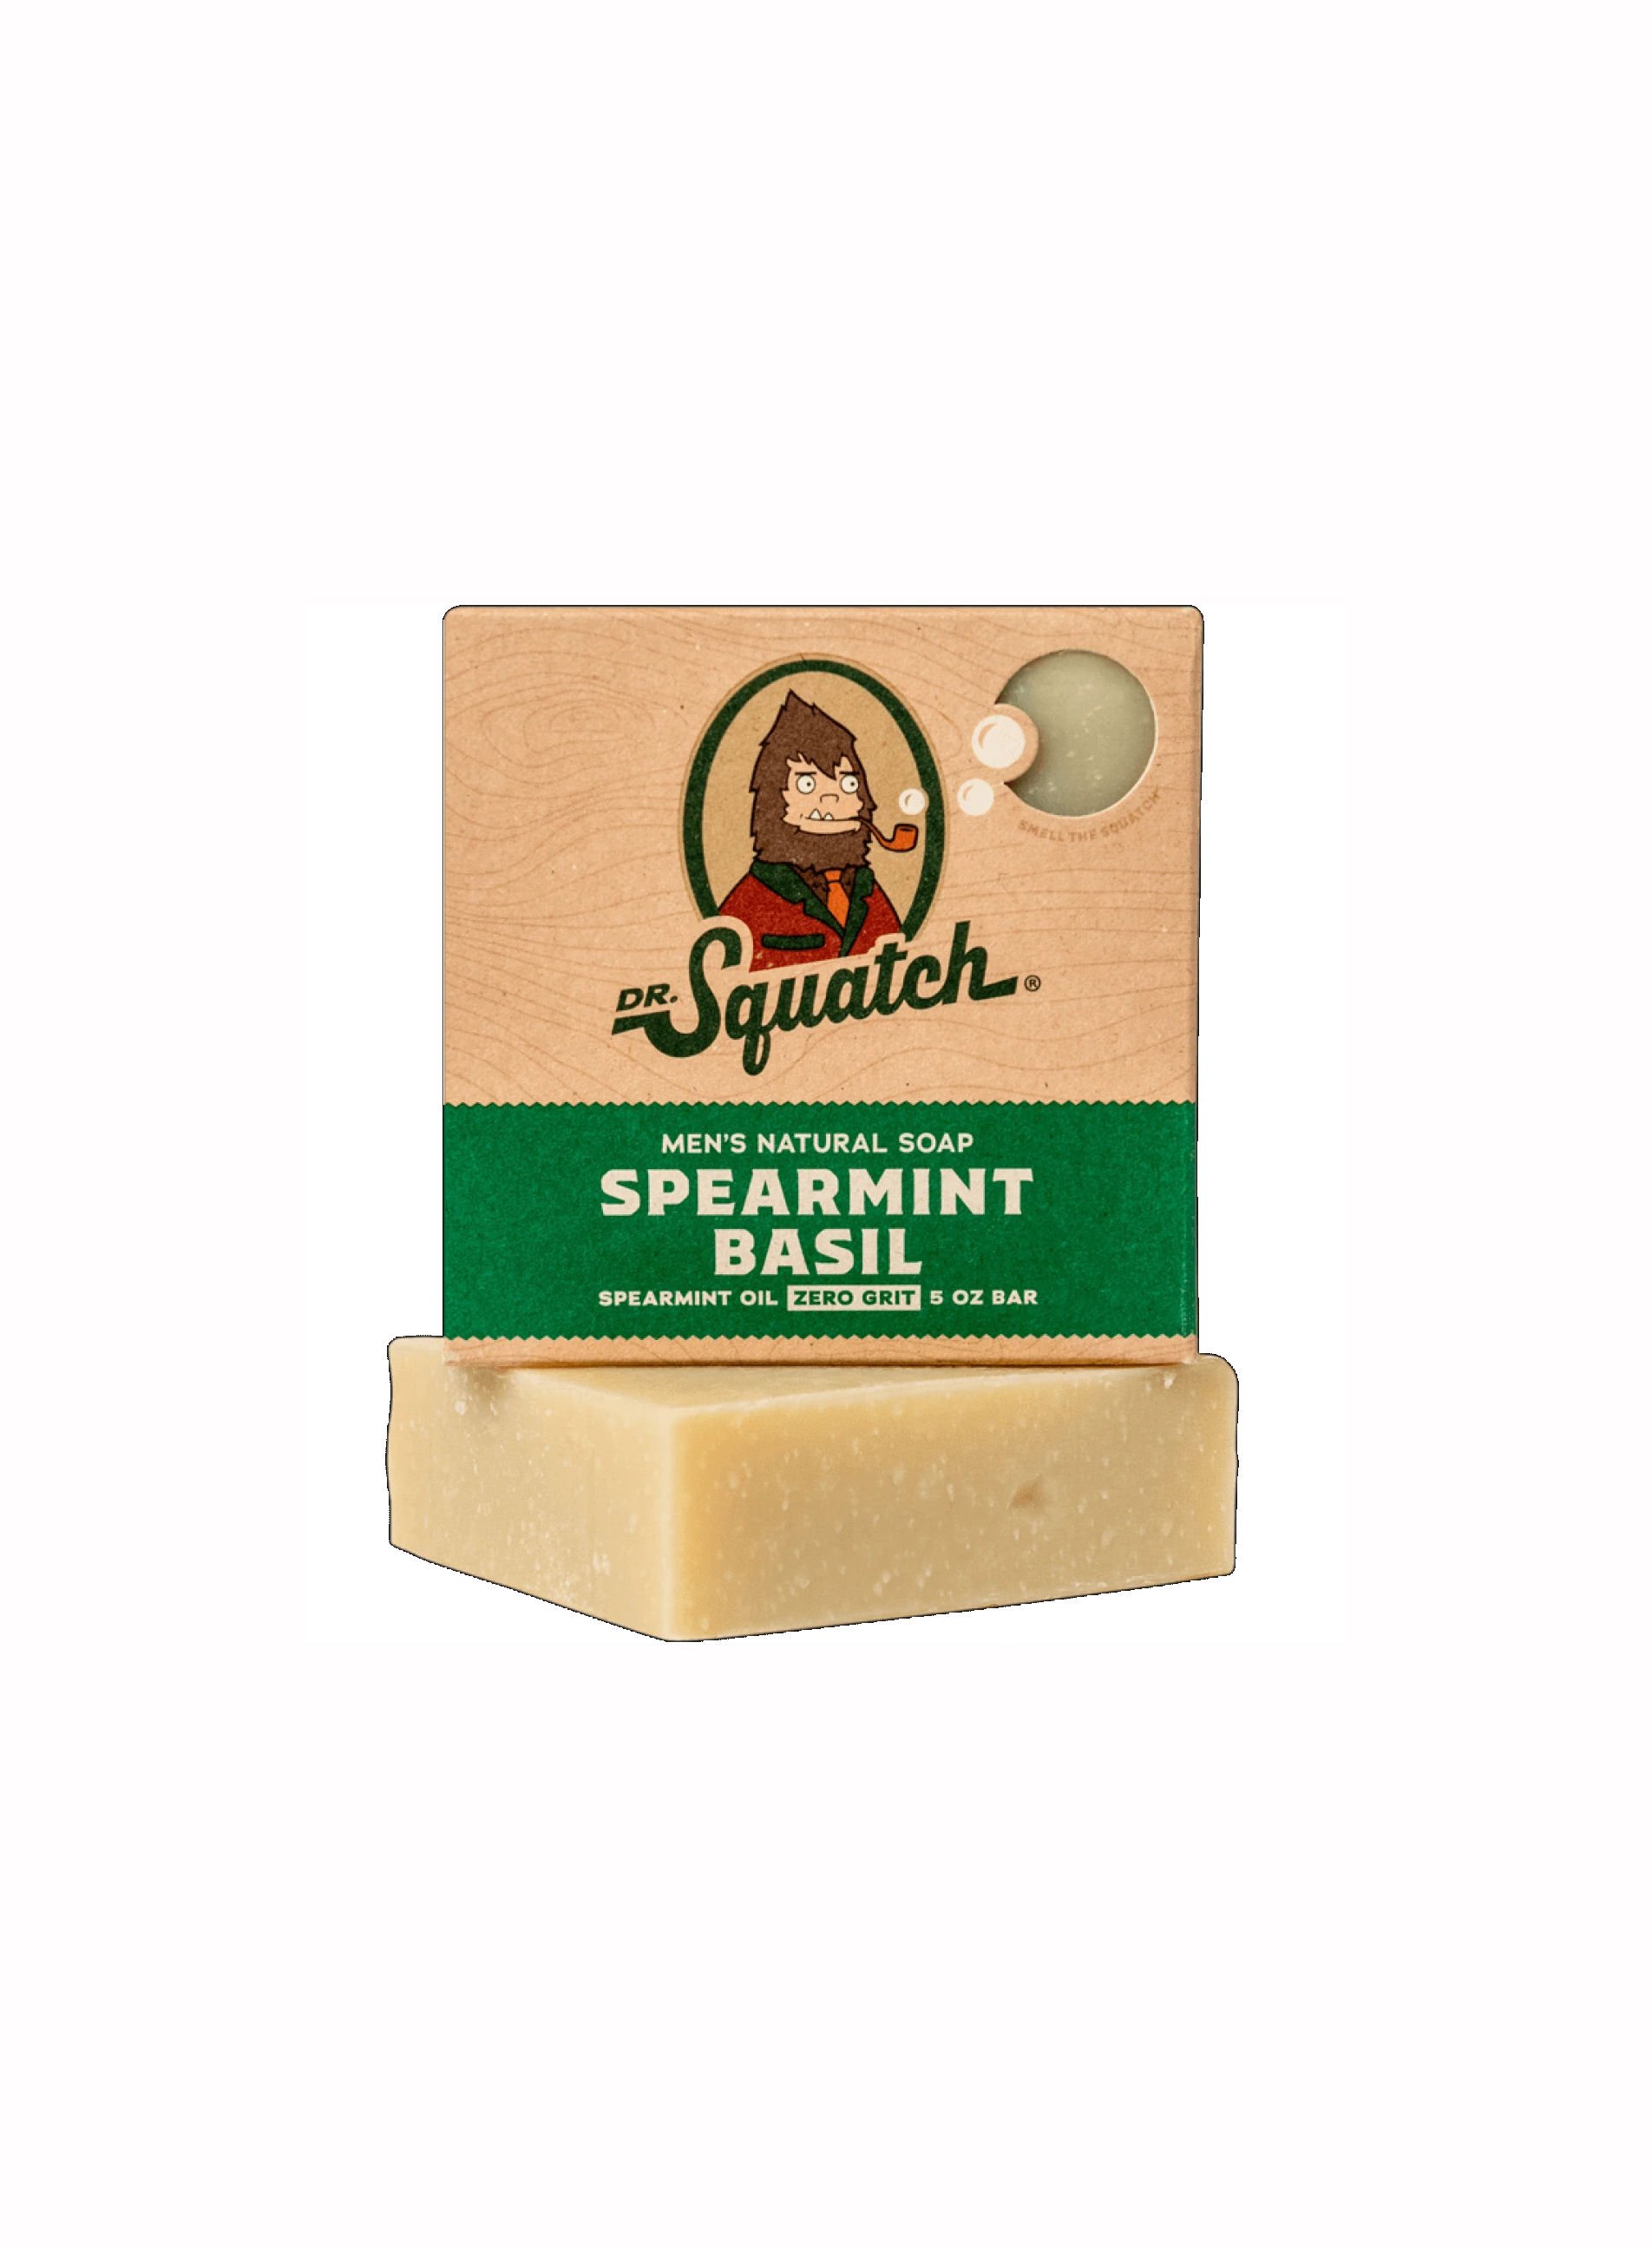 Dr. Squatch Spearmint Basil Scrub Bar Soap — Lost Objects, Found